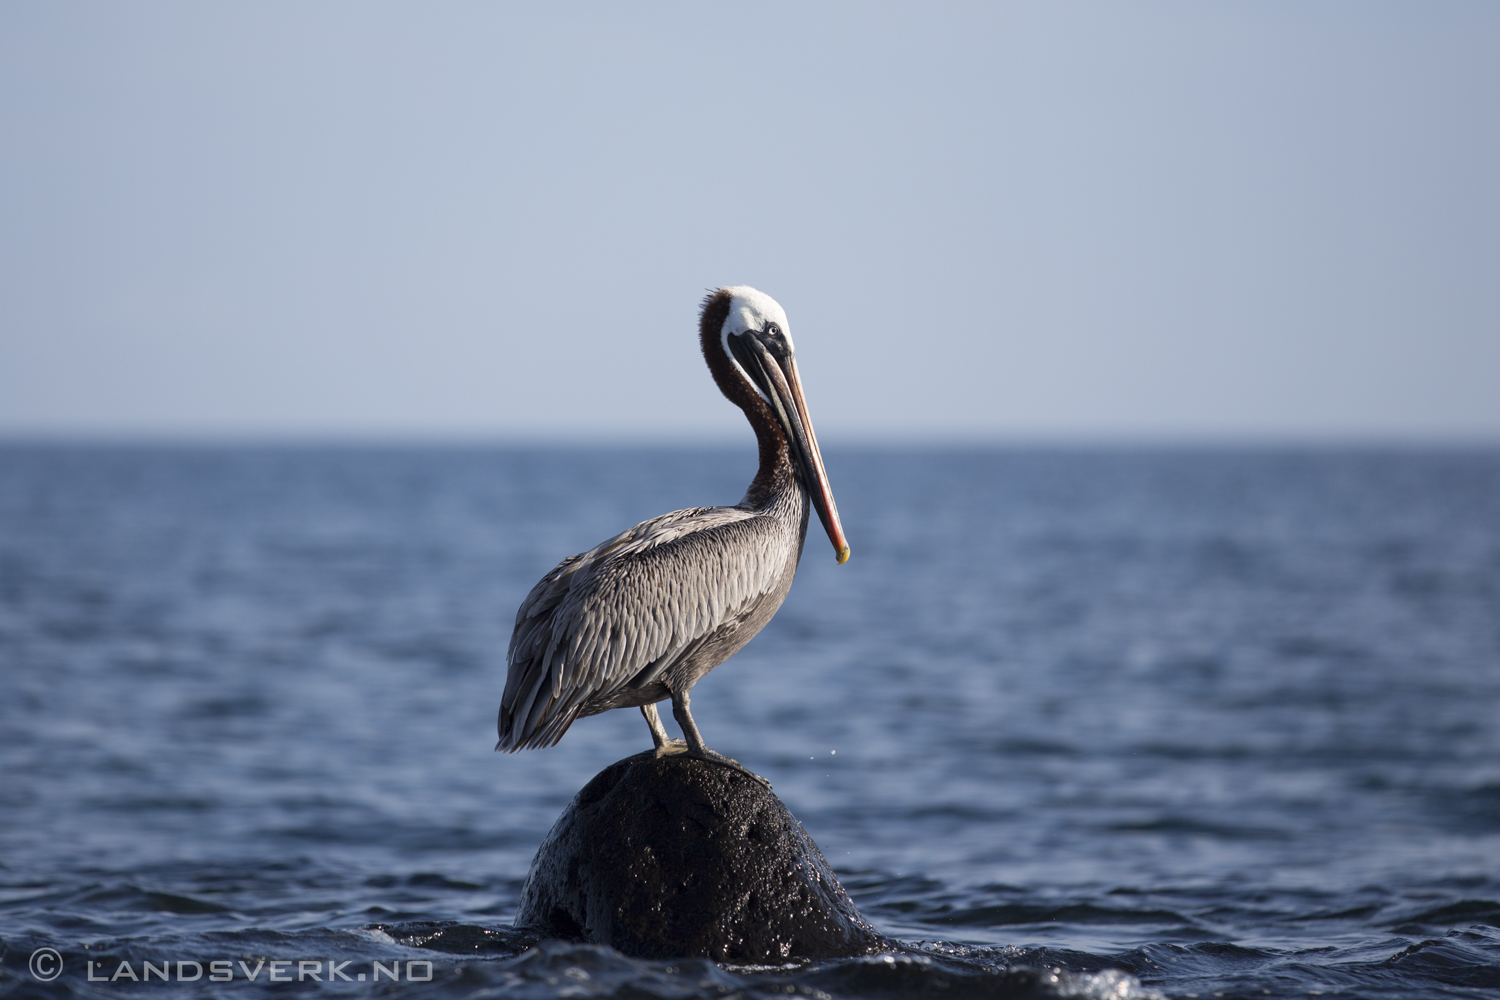 Wild Pelican, Isla Lobos, San Cristobal, Galapagos. 

(Canon EOS 5D Mark III / Canon EF 70-200mm f/2.8 L IS II USM)